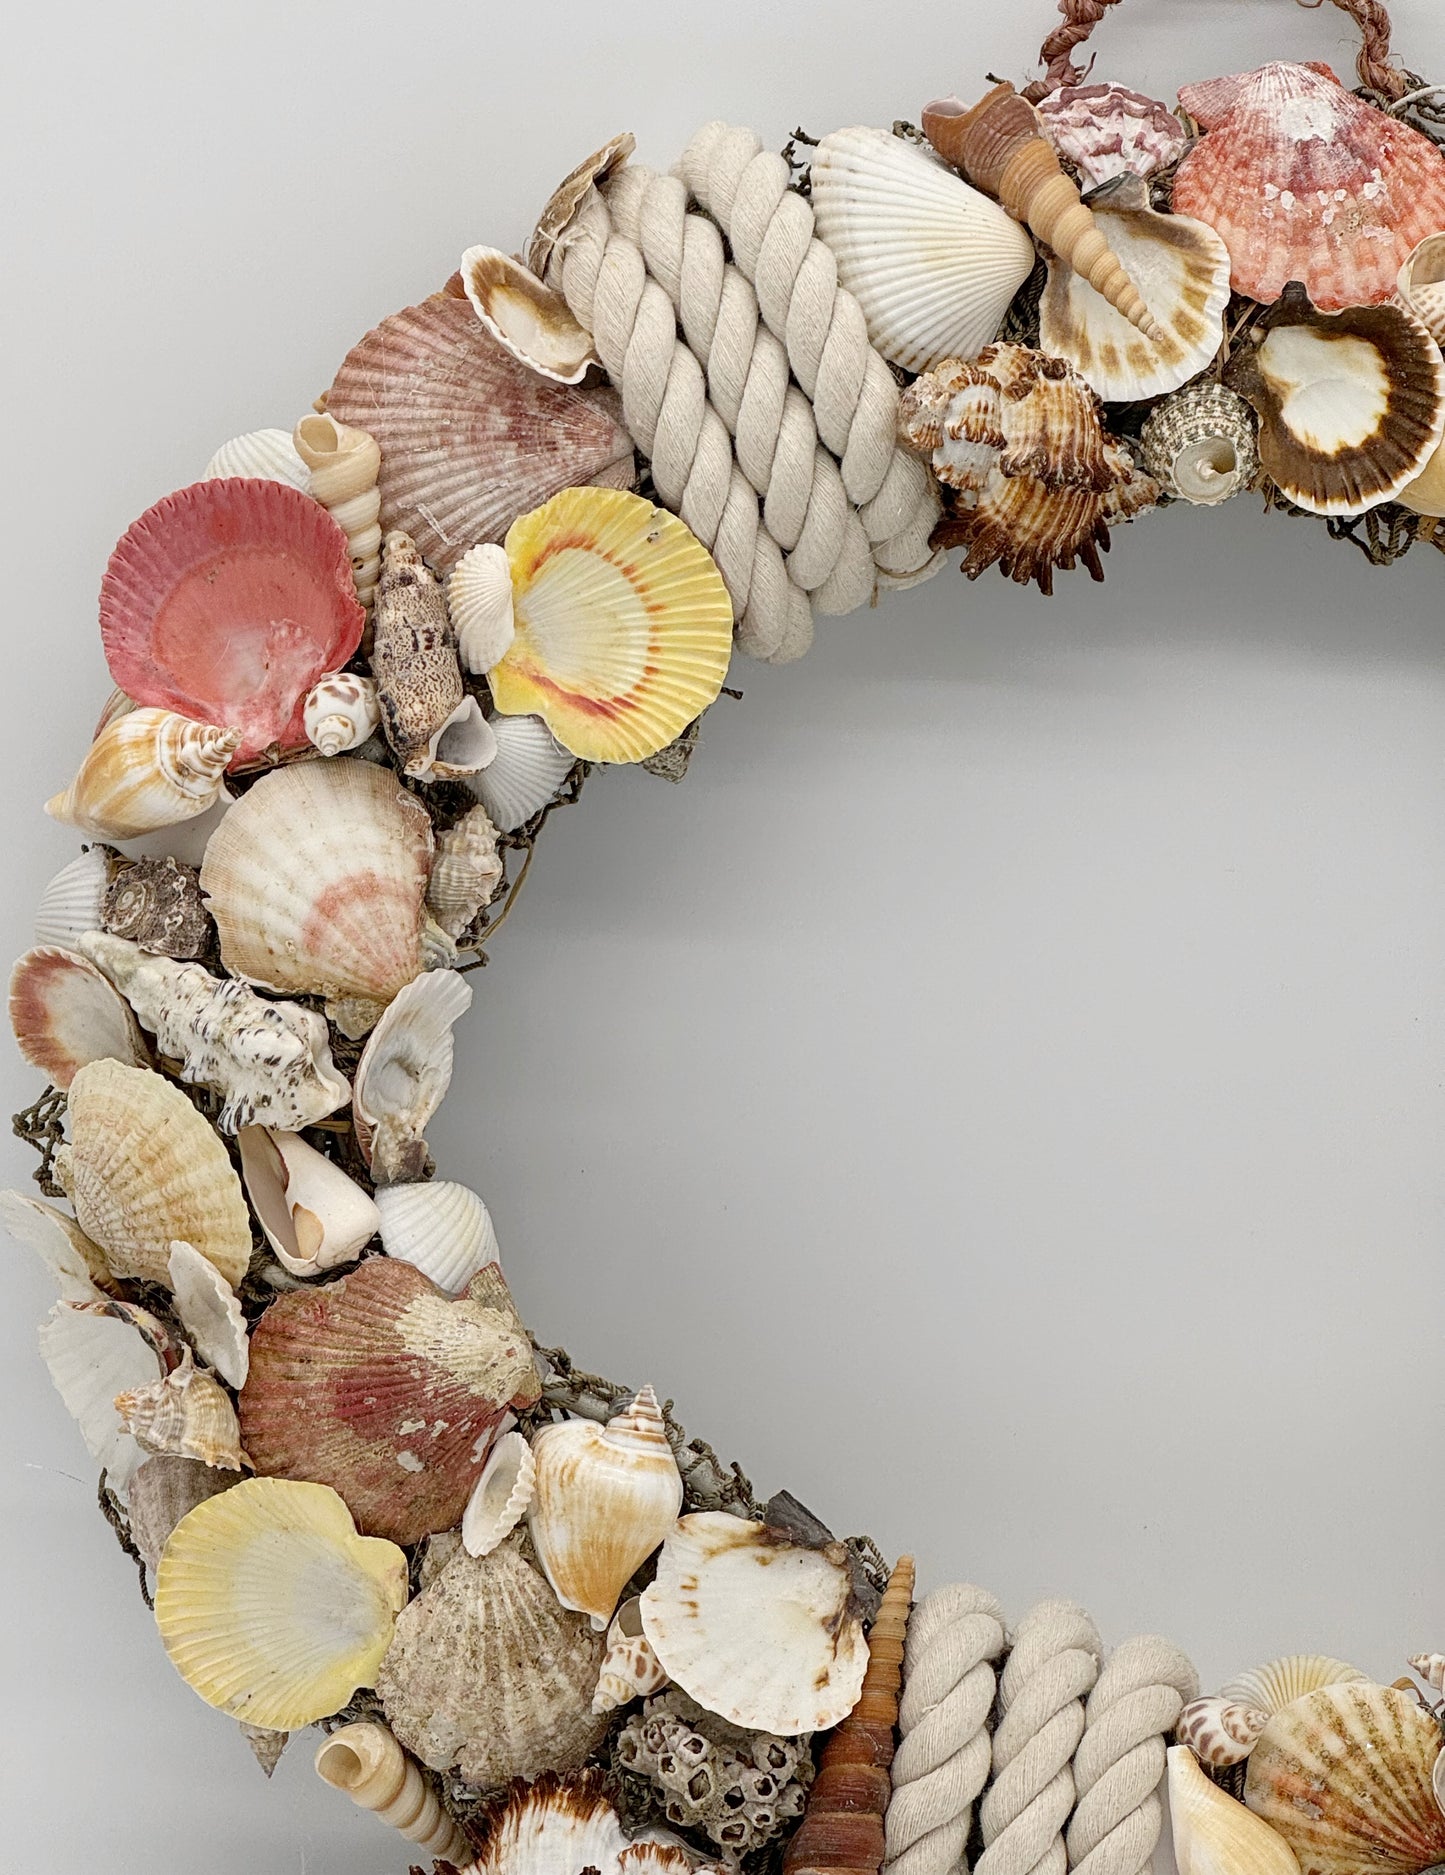 18" Mixed Seashells Wreath